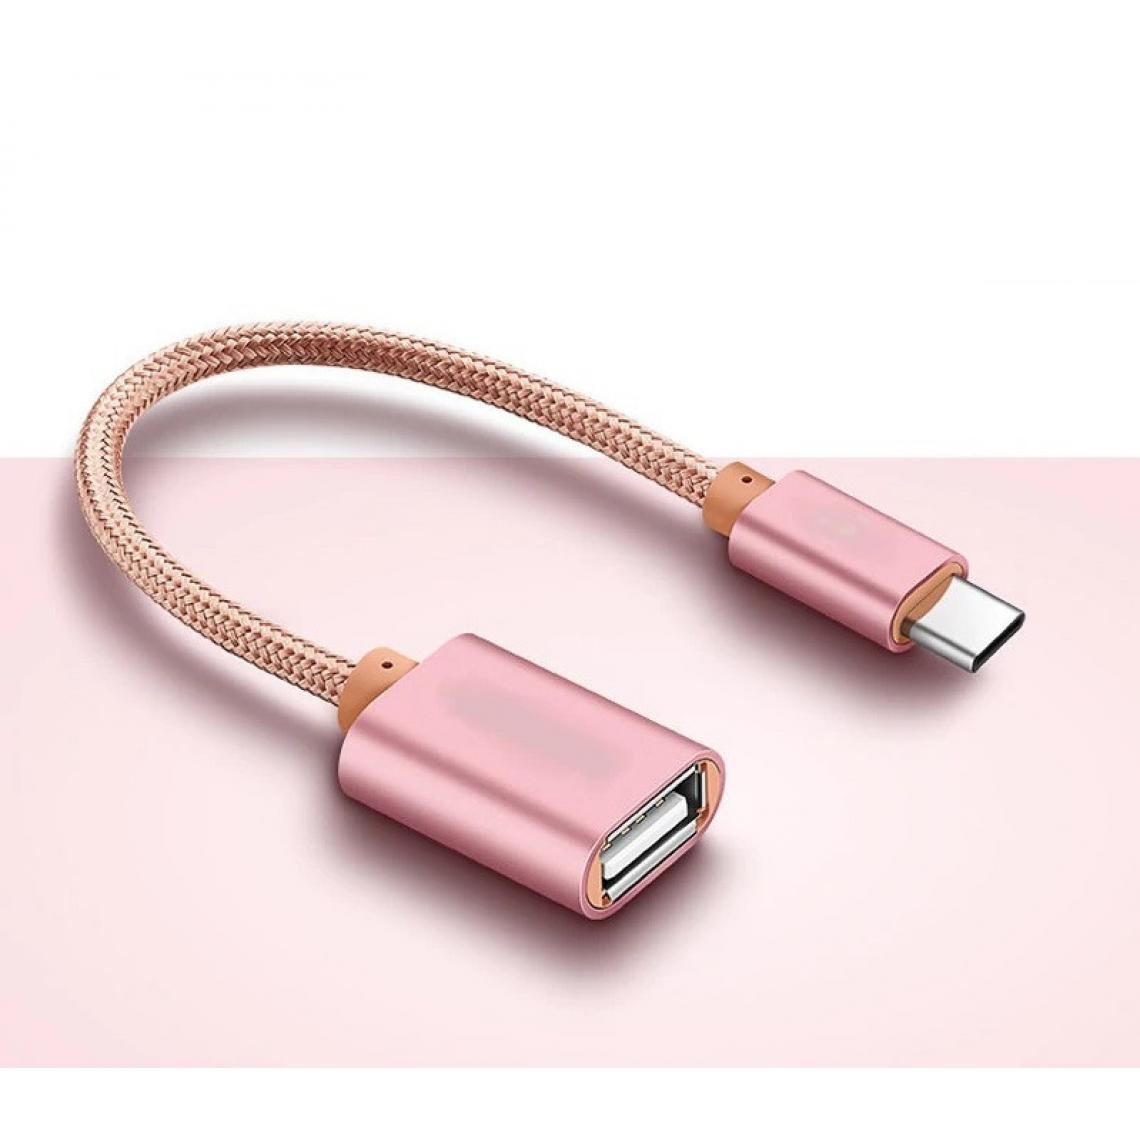 Shot - Adaptateur Type C/USB pour SONY Xperia XZ2 Compact Smartphone & MAC USB-C Clef (ROSE) - Autres accessoires smartphone